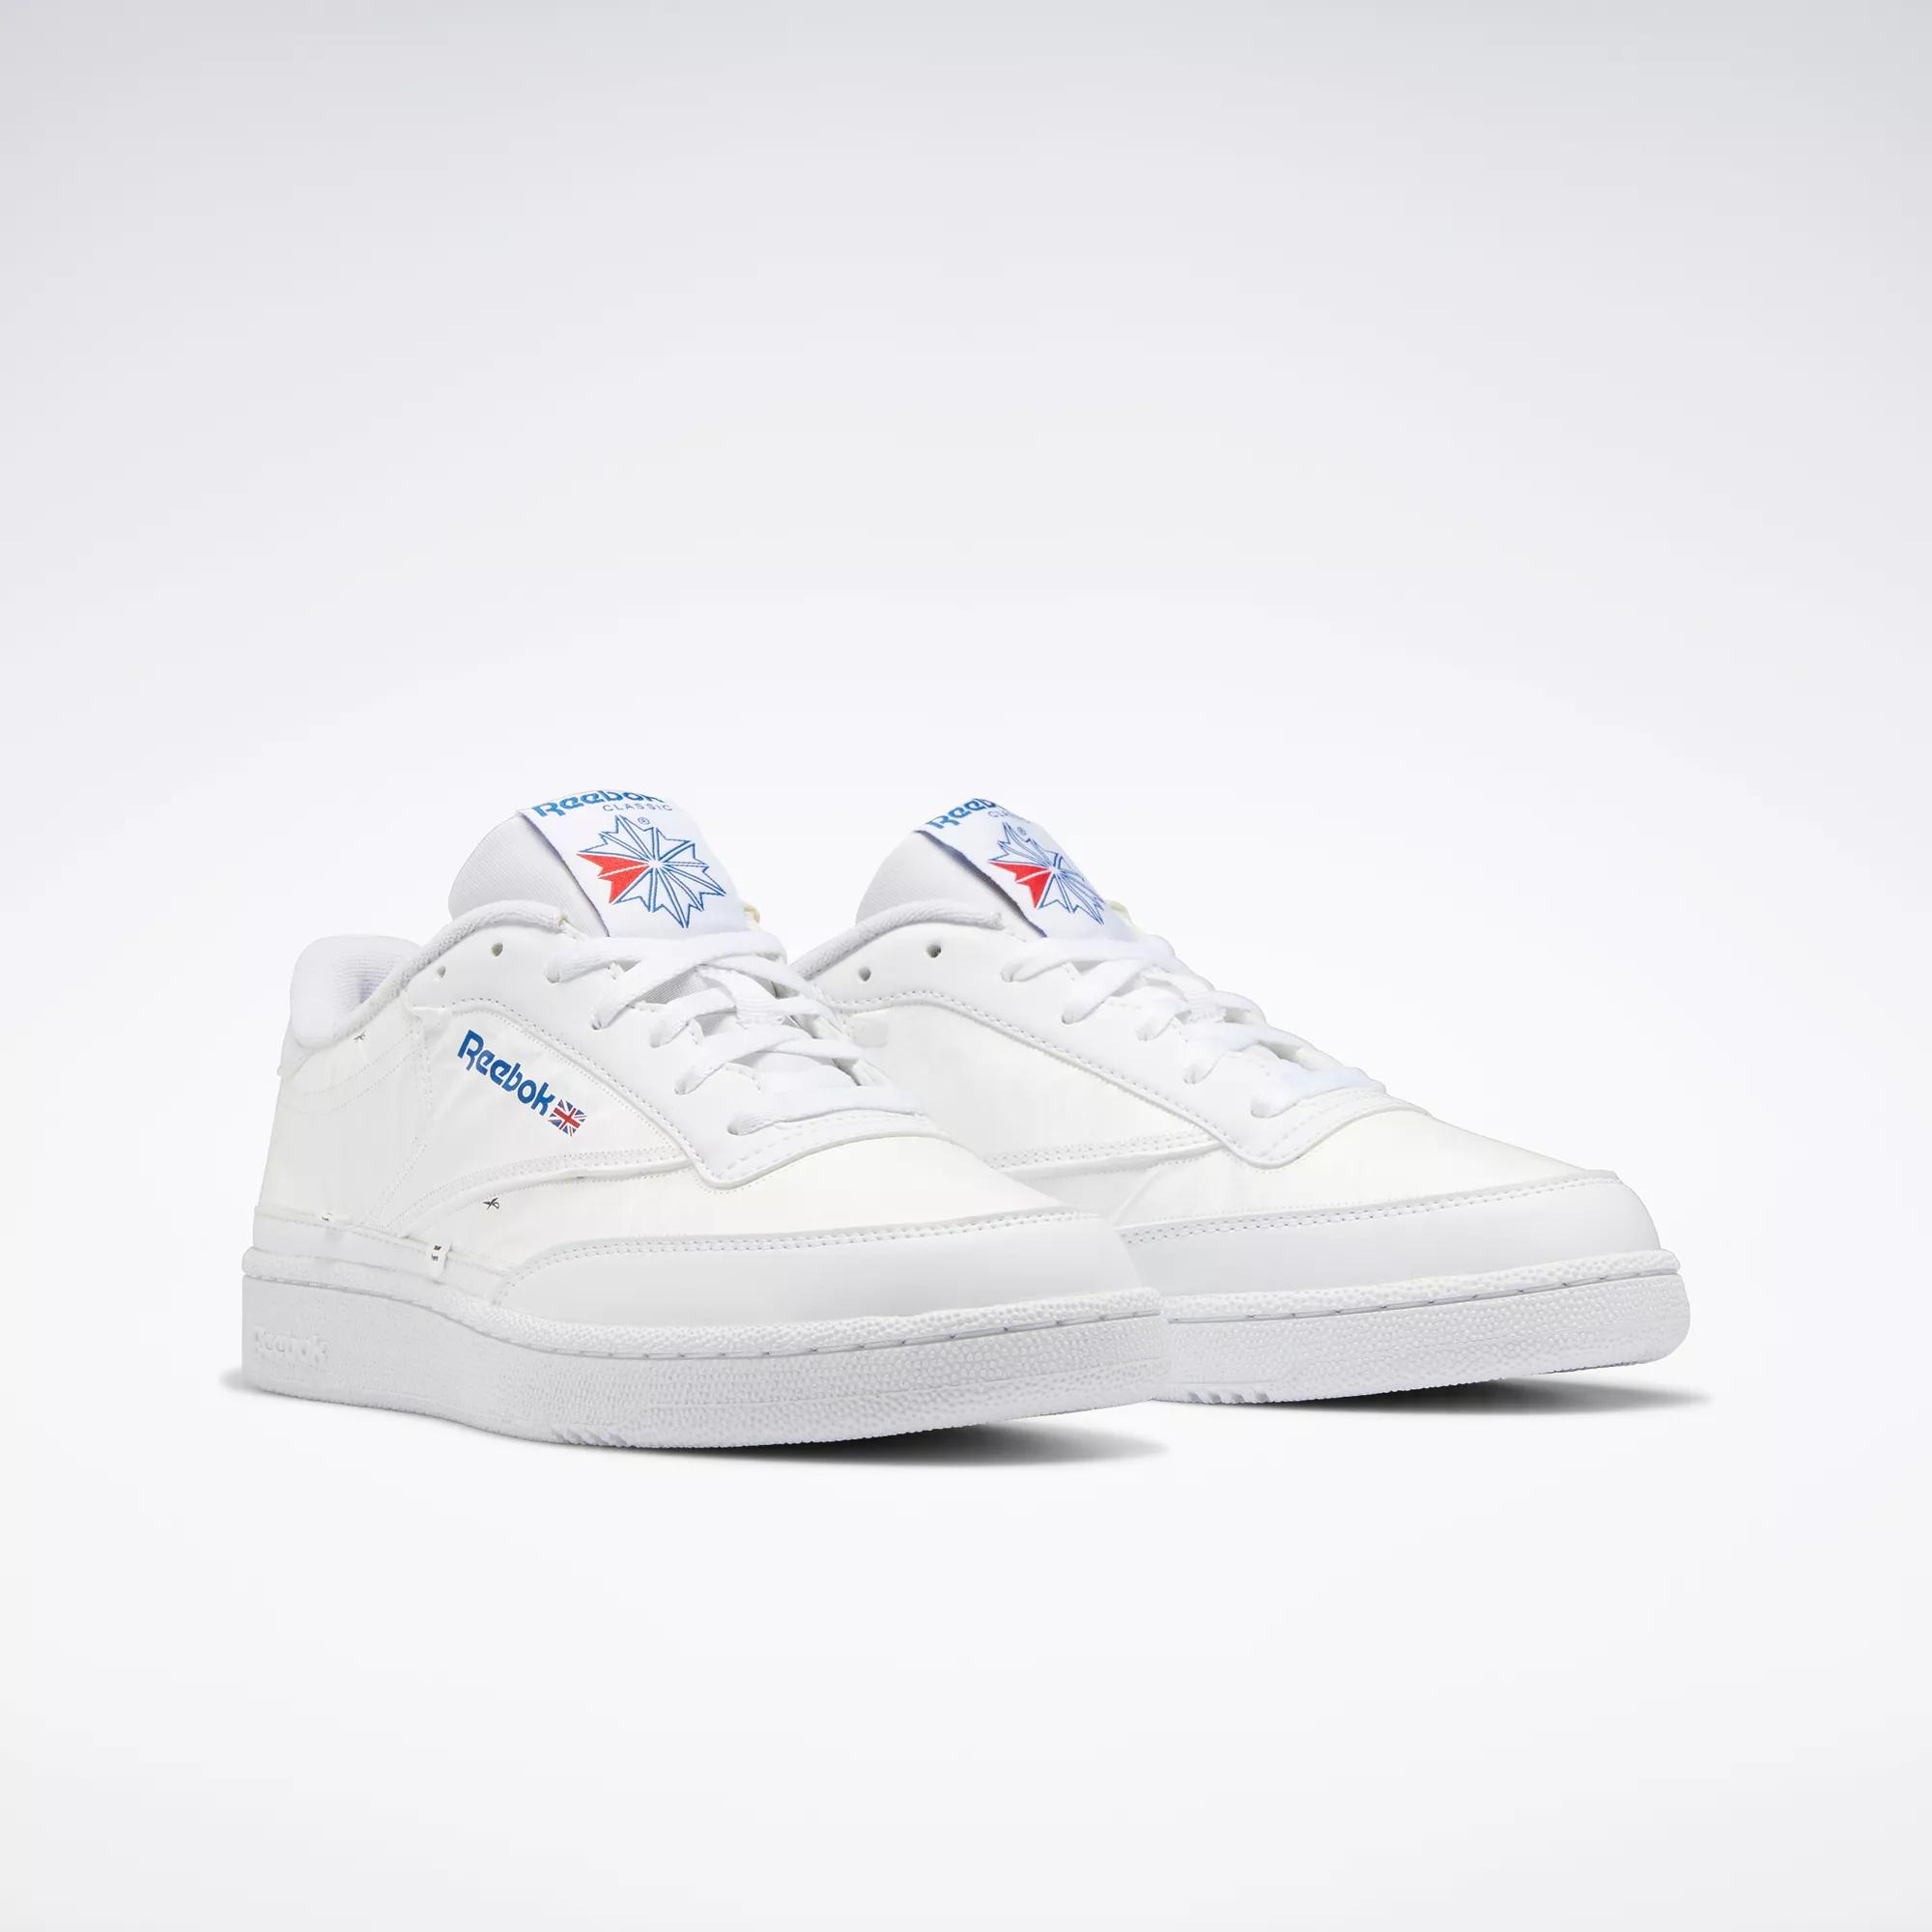 Club C 85 U Shoes - Ftwr White / Ftwr White / Vector Blue | Reebok